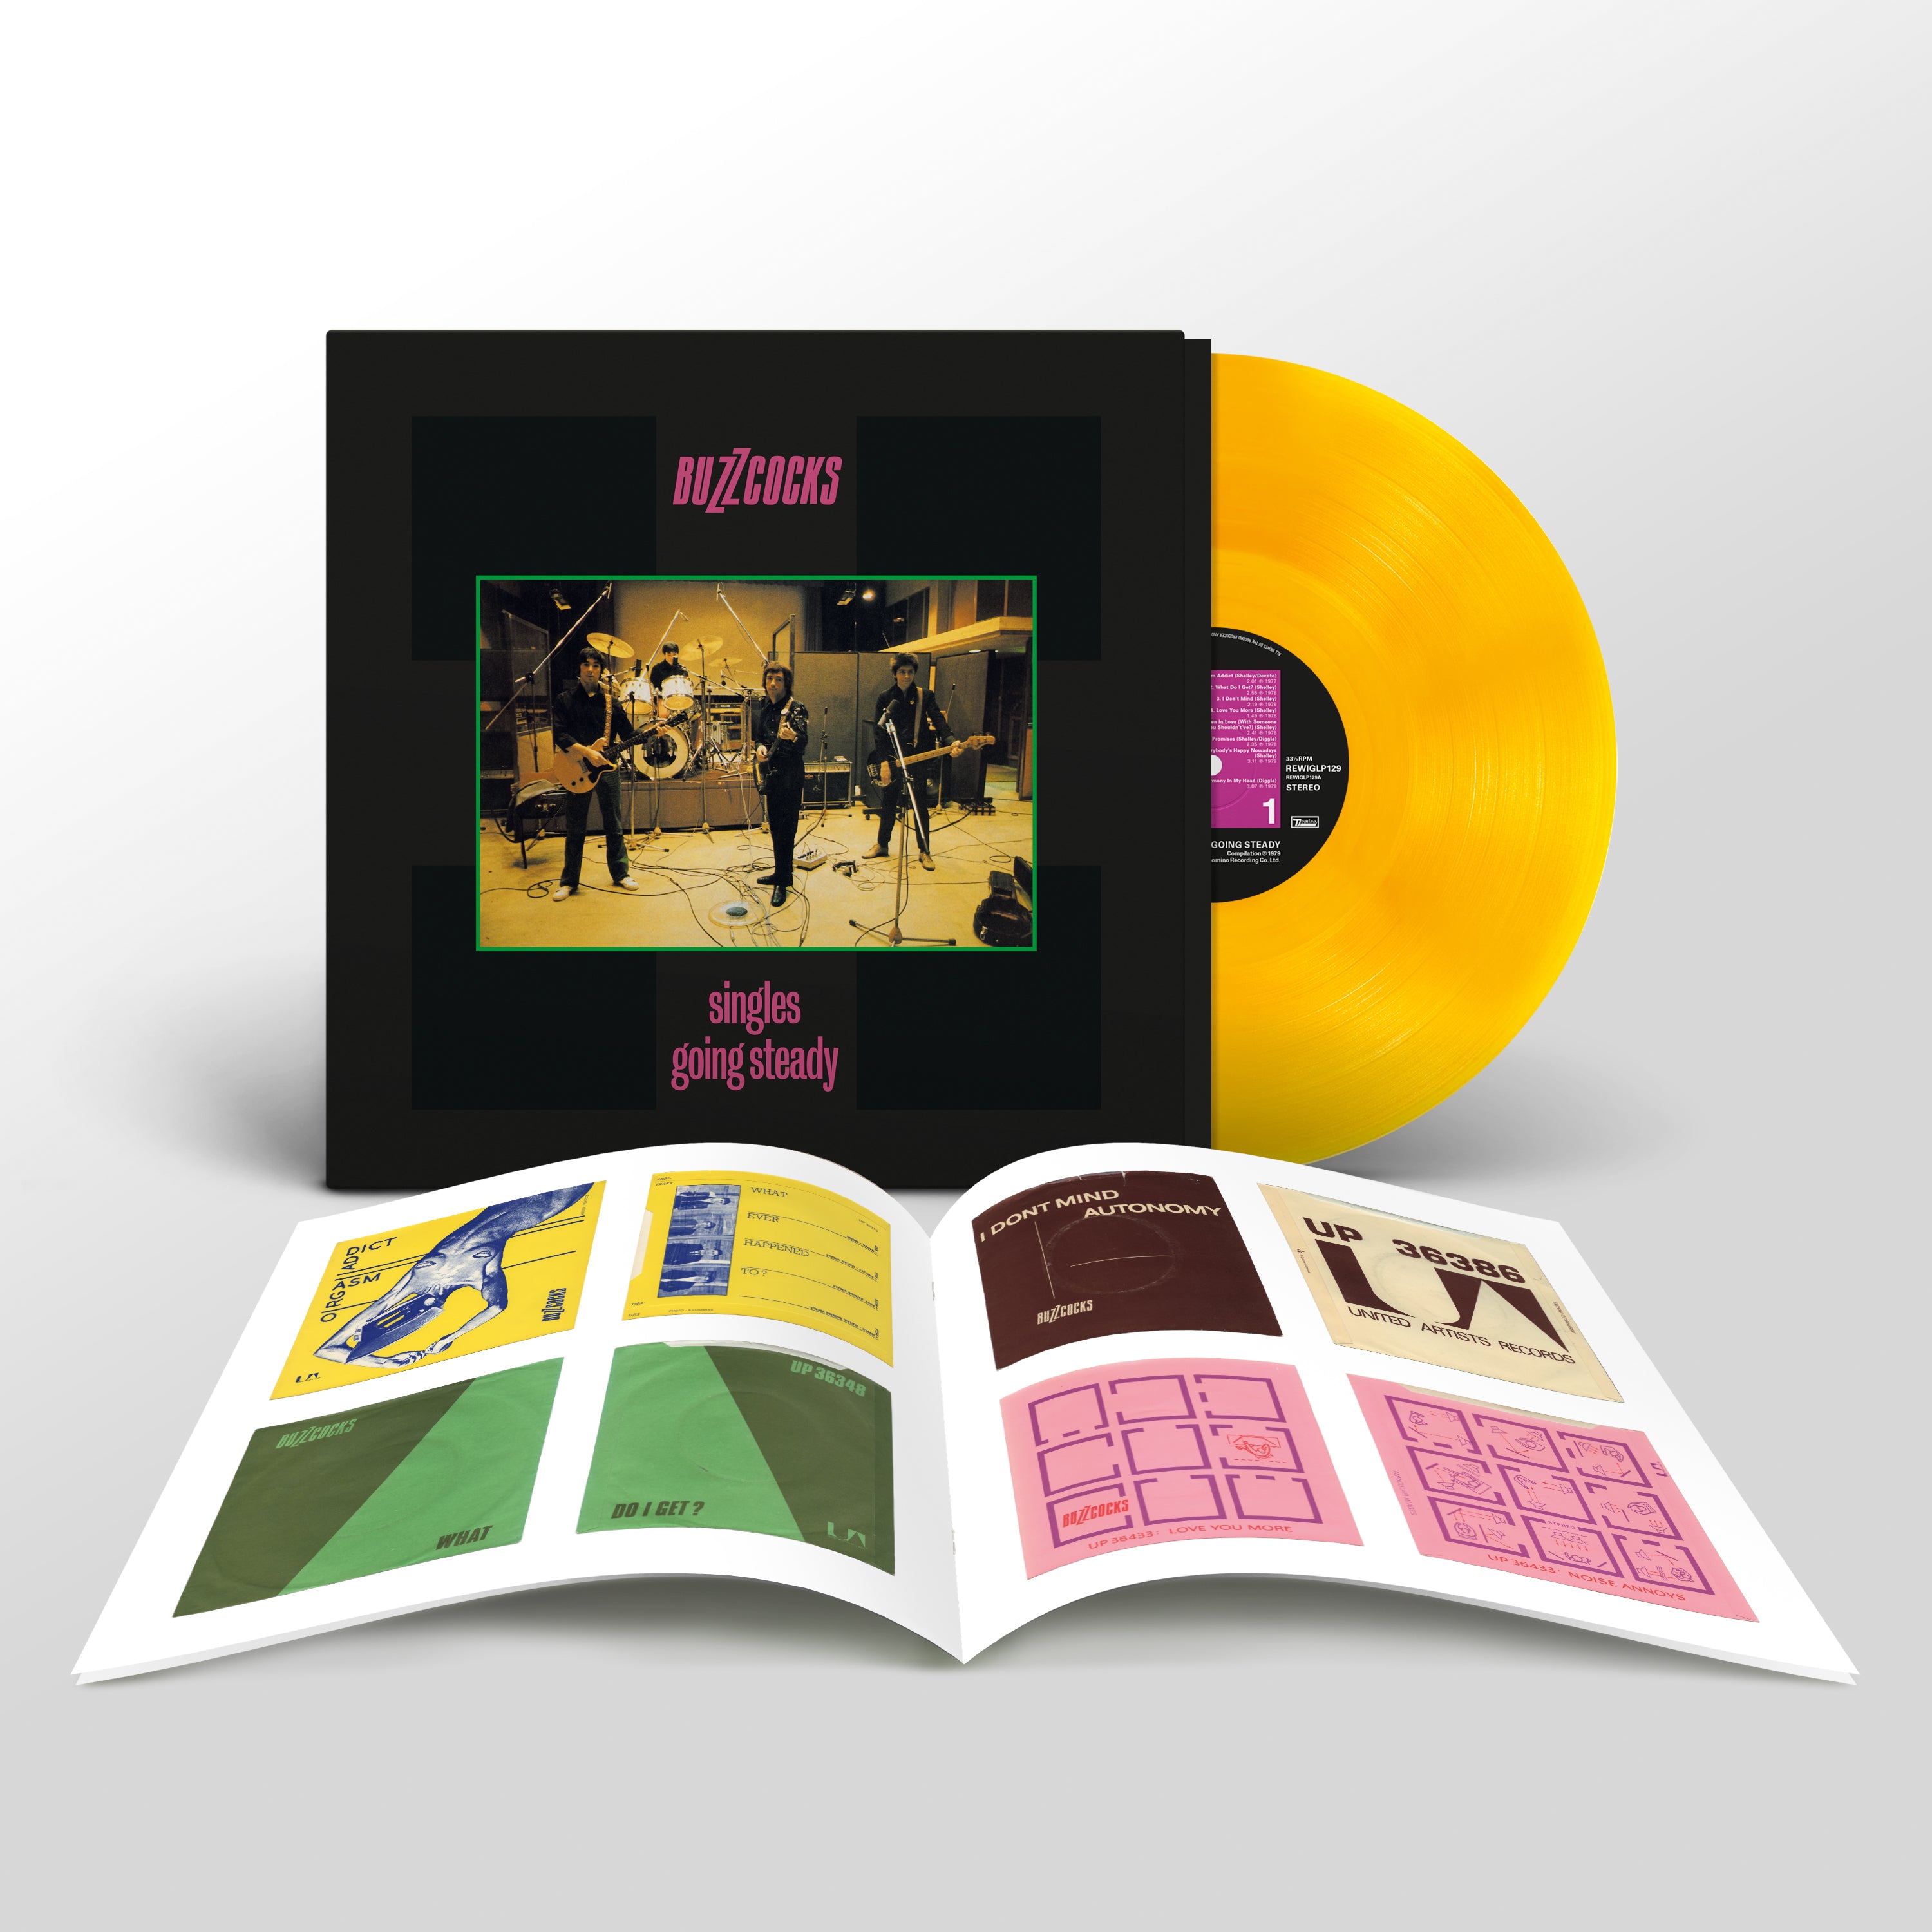 Buzzcocks - Singles Going Steady: Limited 45th Anniversary Edition Orange Vinyl LP